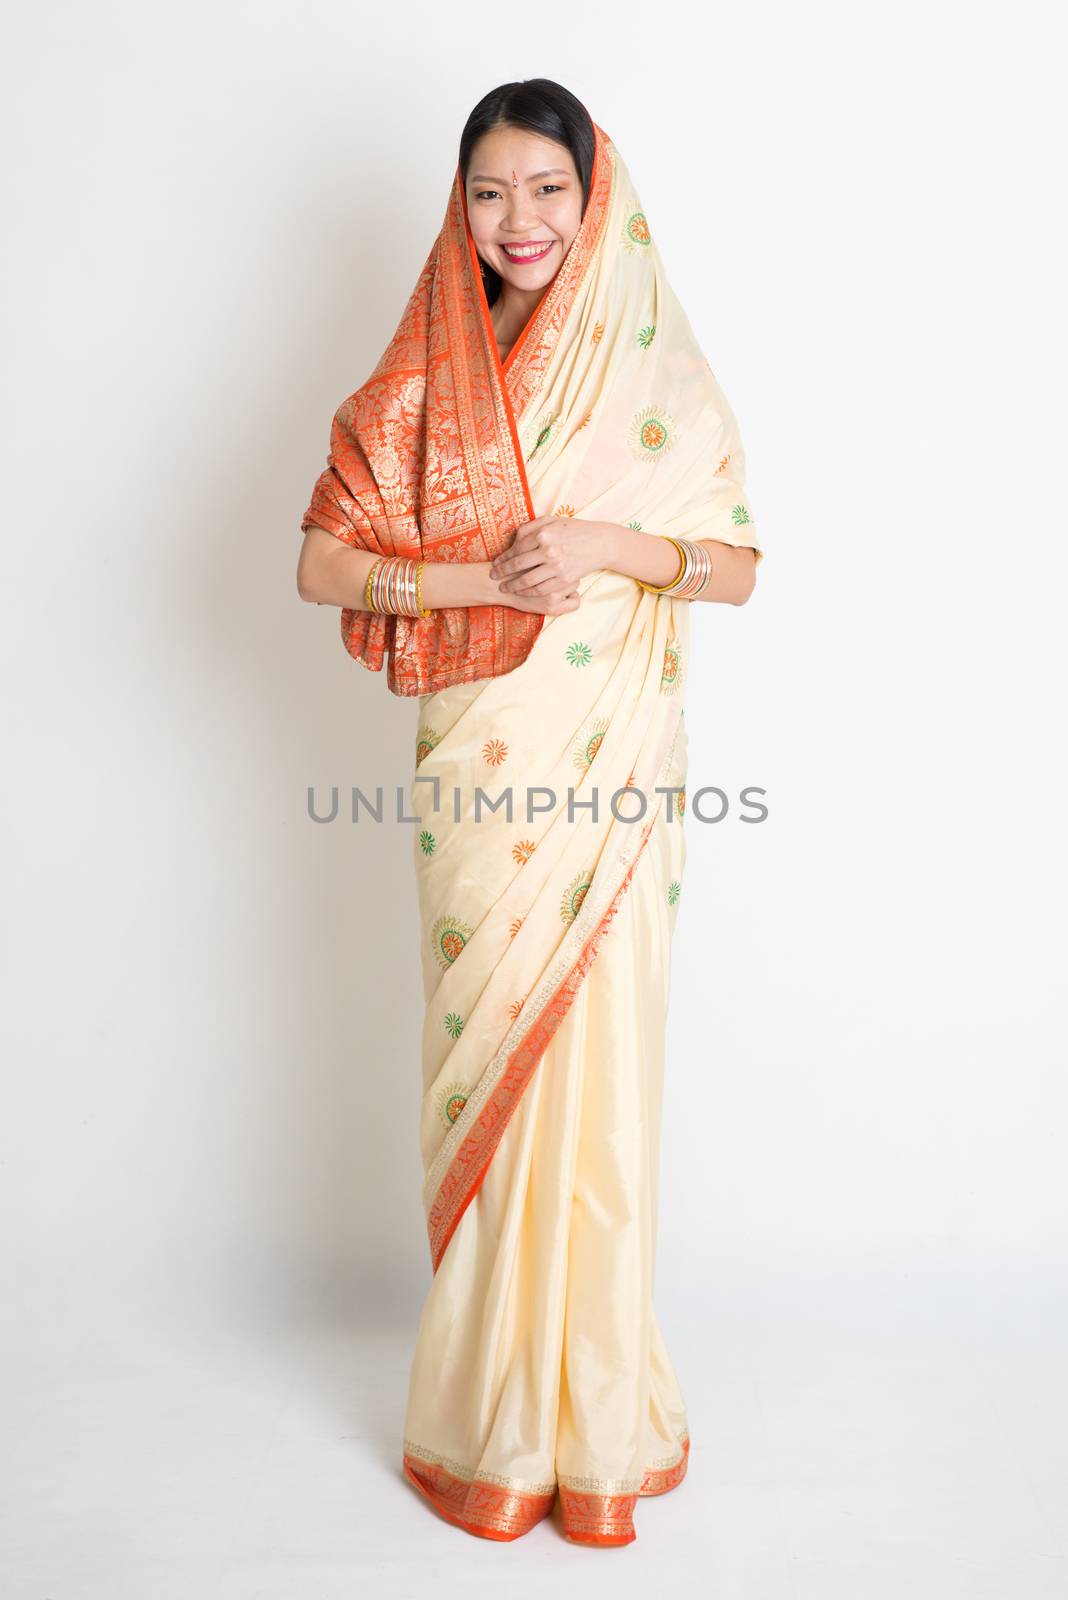 Female in Indian sari by szefei